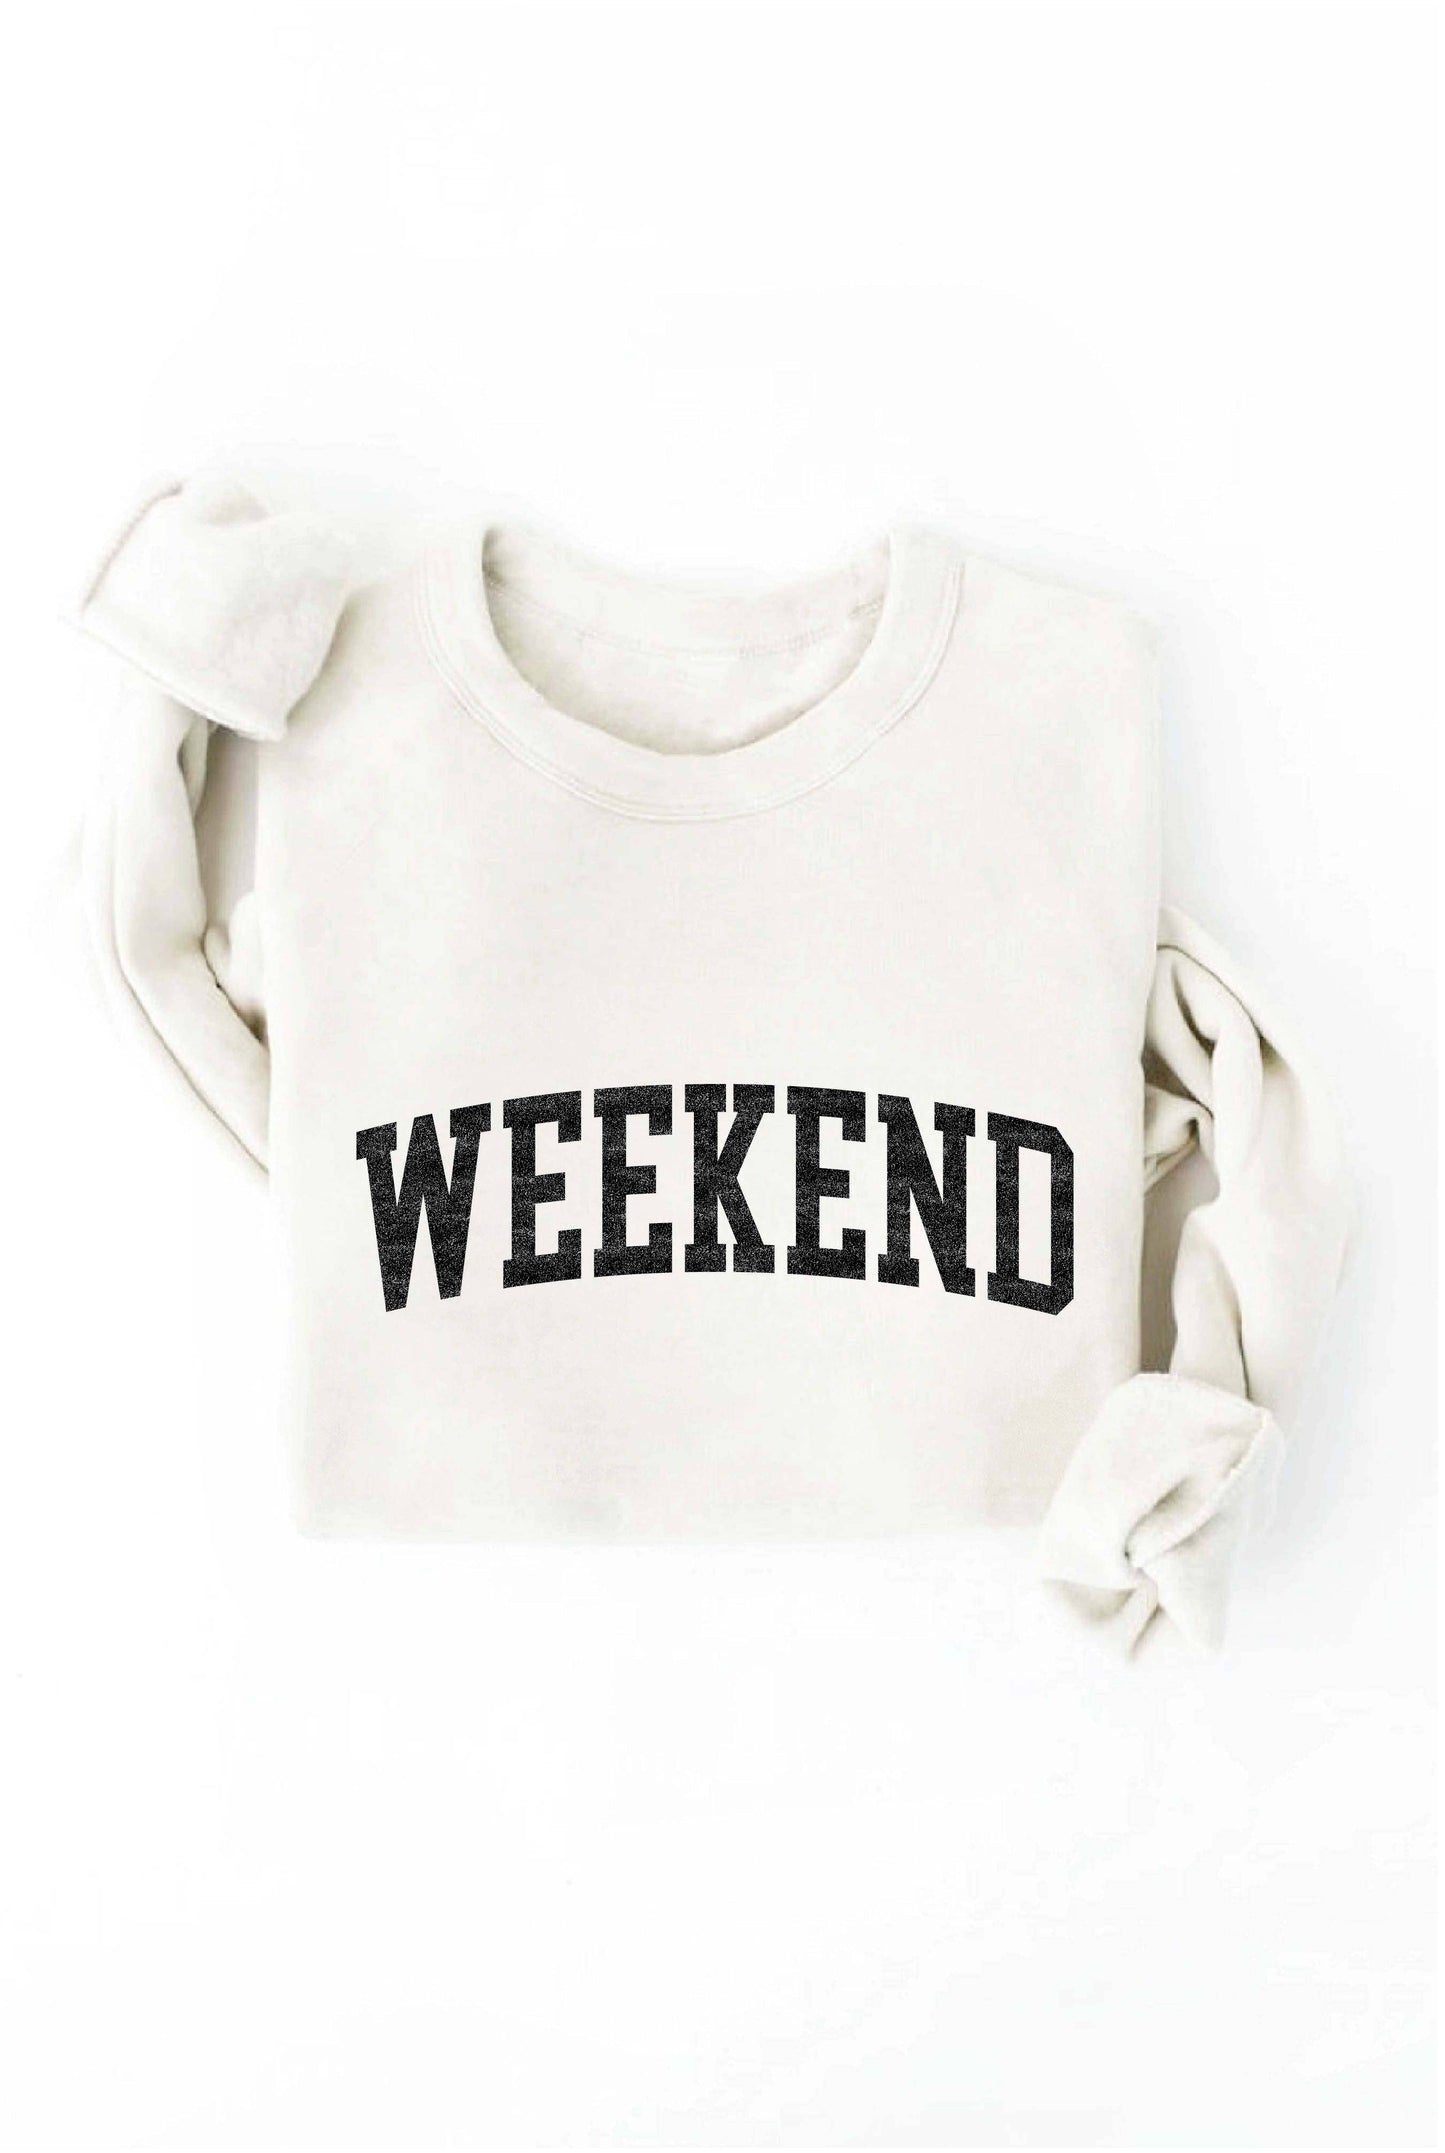 WEEKEND Graphic Sweatshirt…white